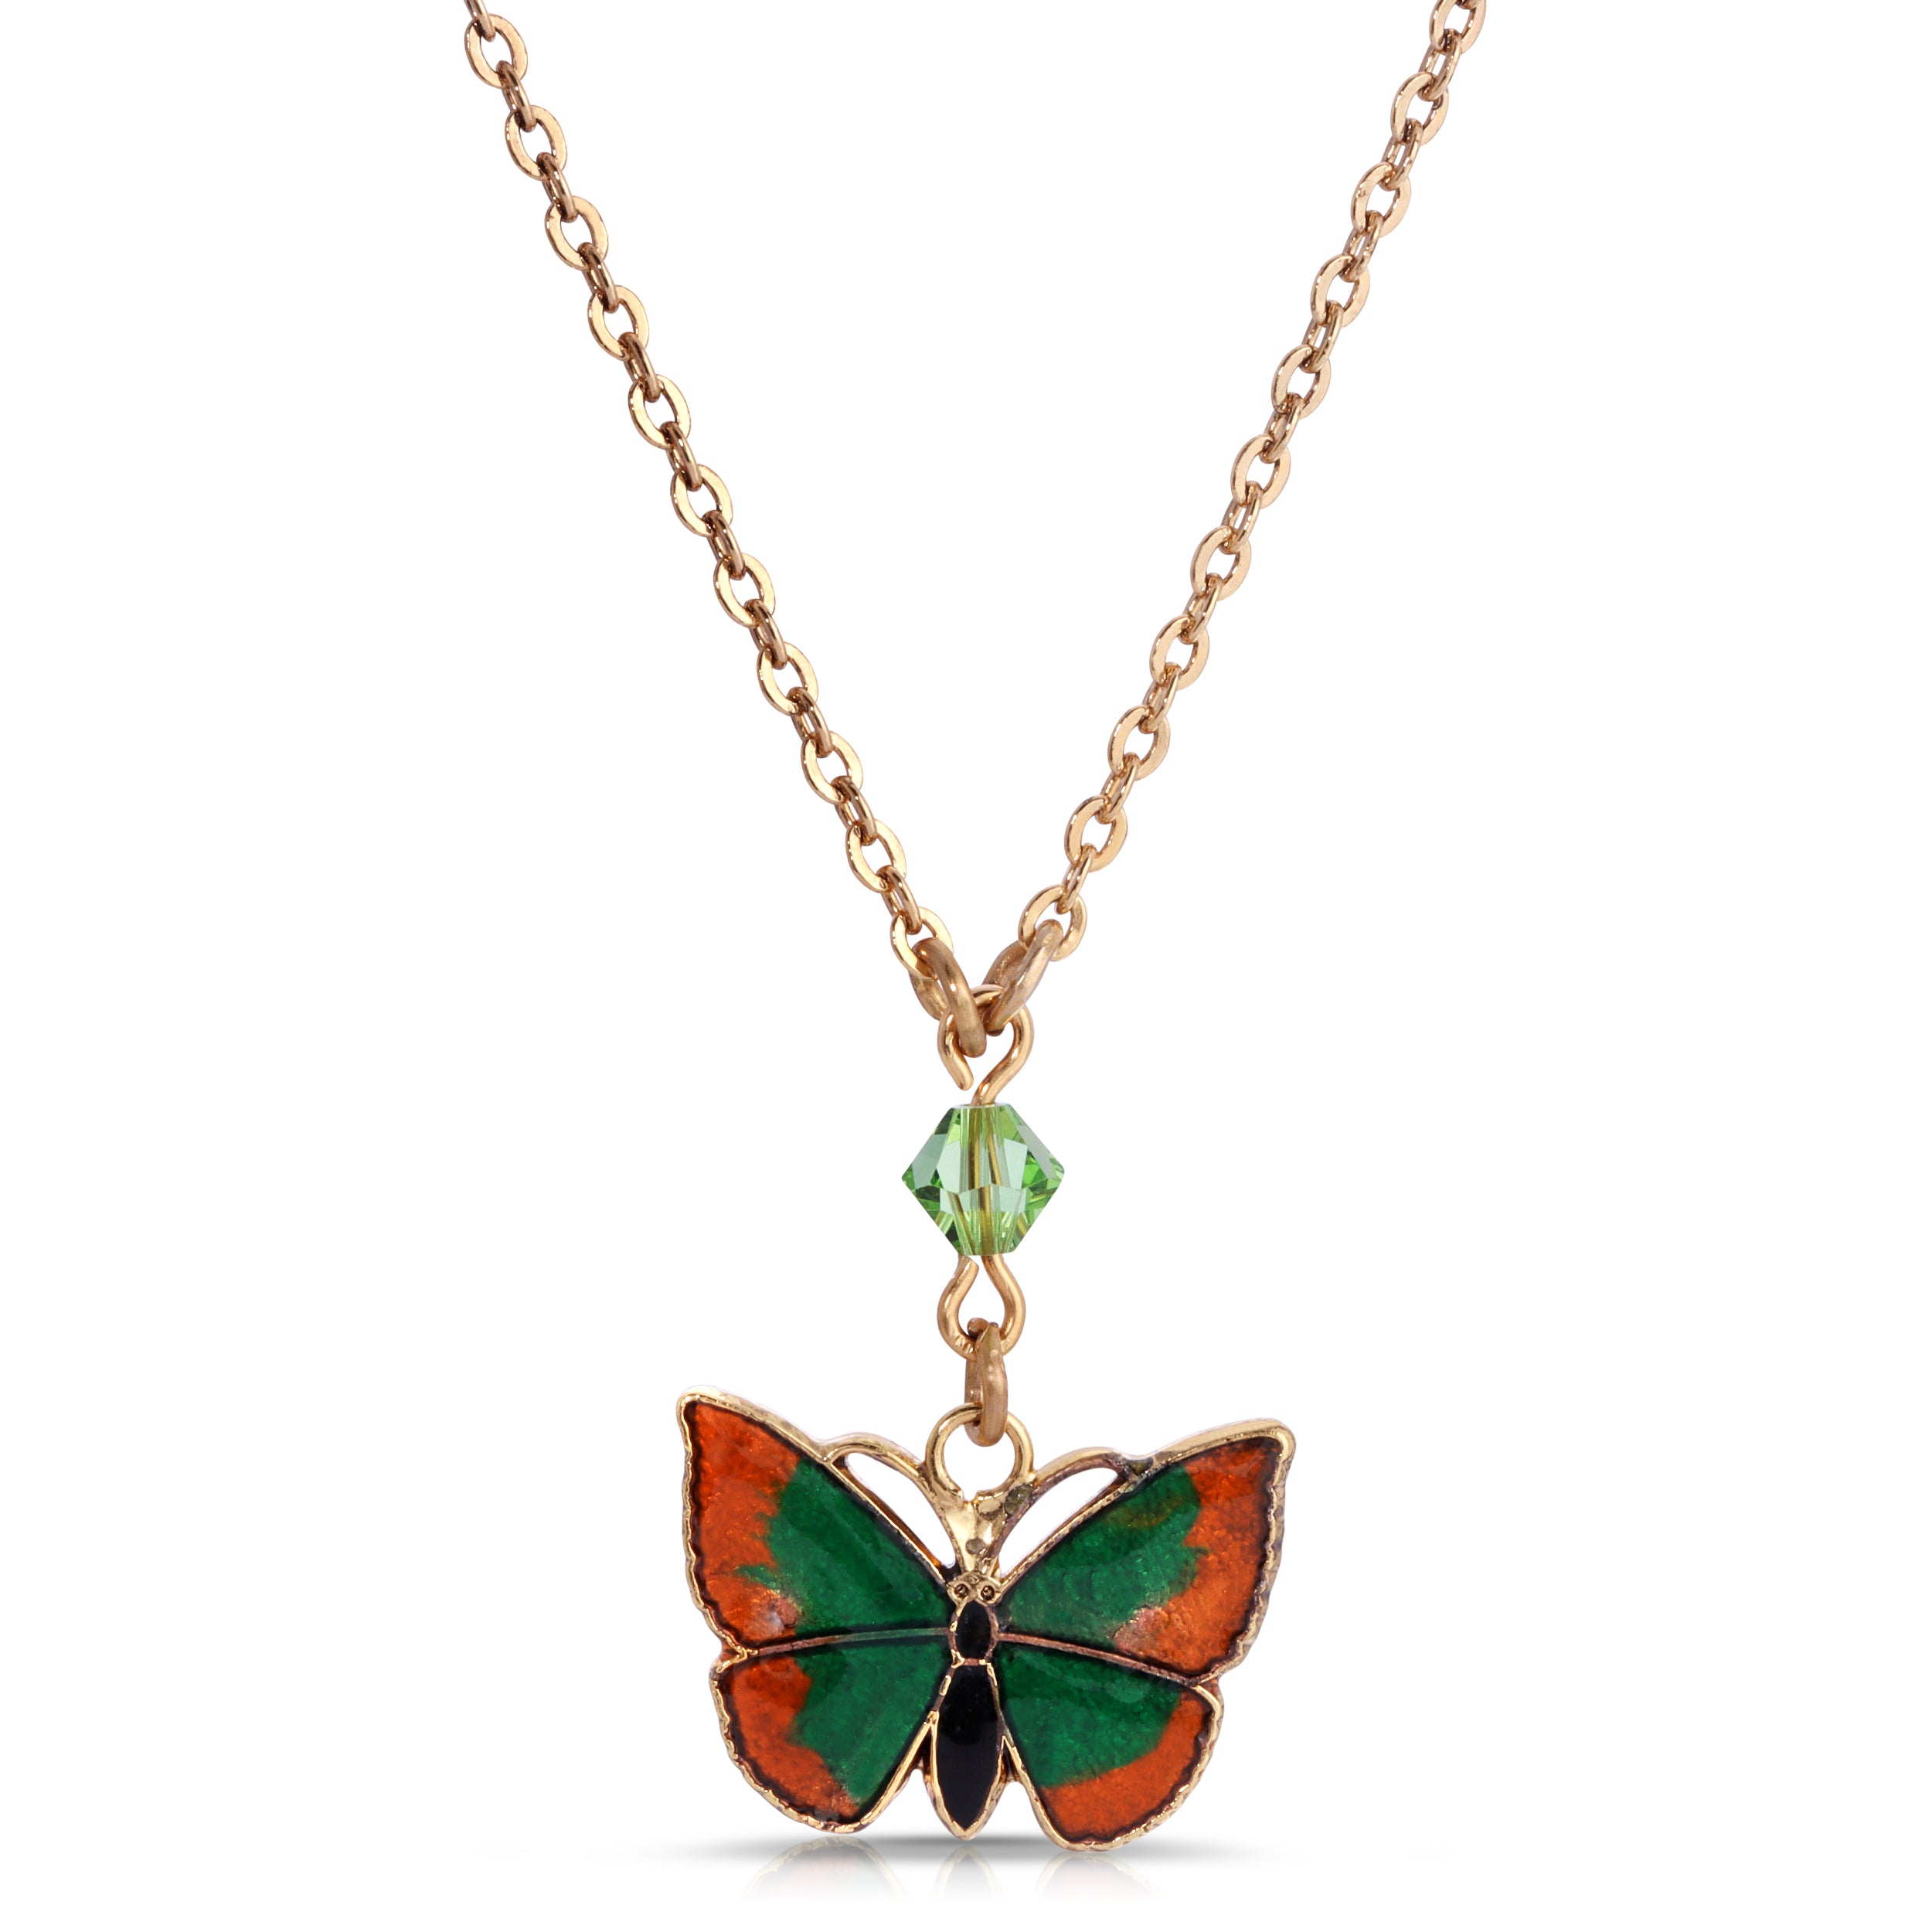 Emerald & Peridot Spark Necklace Necklaces Joanna Gollberg Pistachios